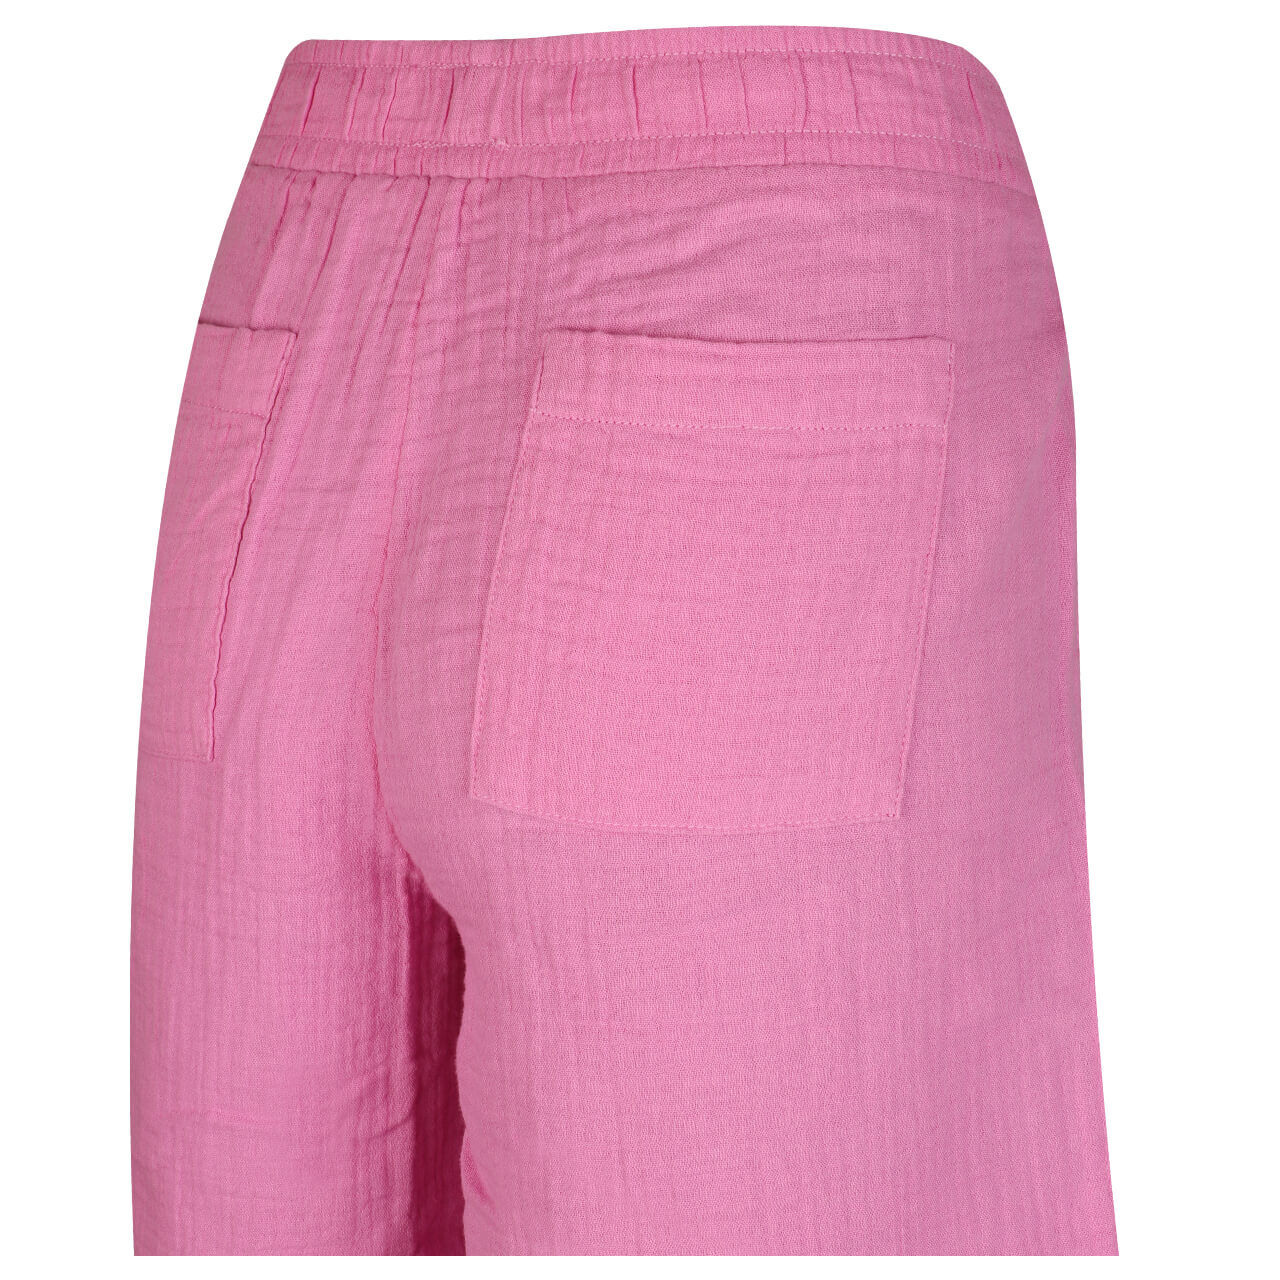 s.Oliver Damen Baumwoll Shorts lilac pink